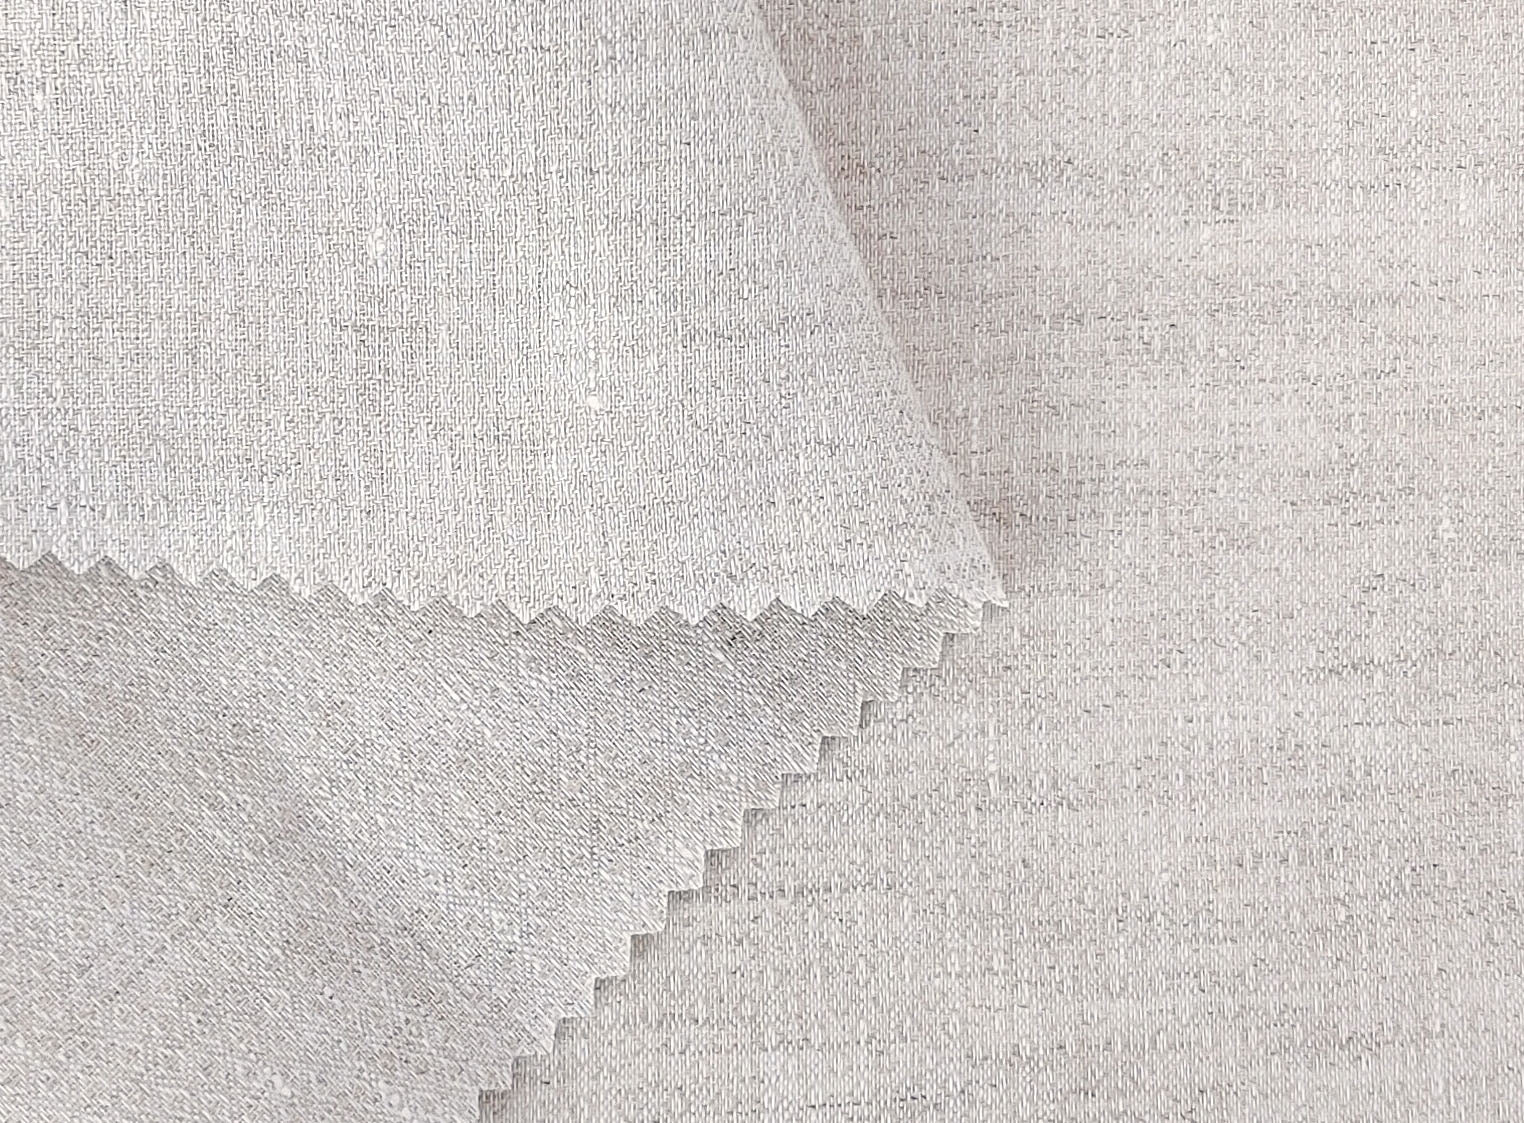 100% Linen Small Rhombus Jacquard Fabric in Light Natural Hue 4338 - The Linen Lab - Natural(Light)